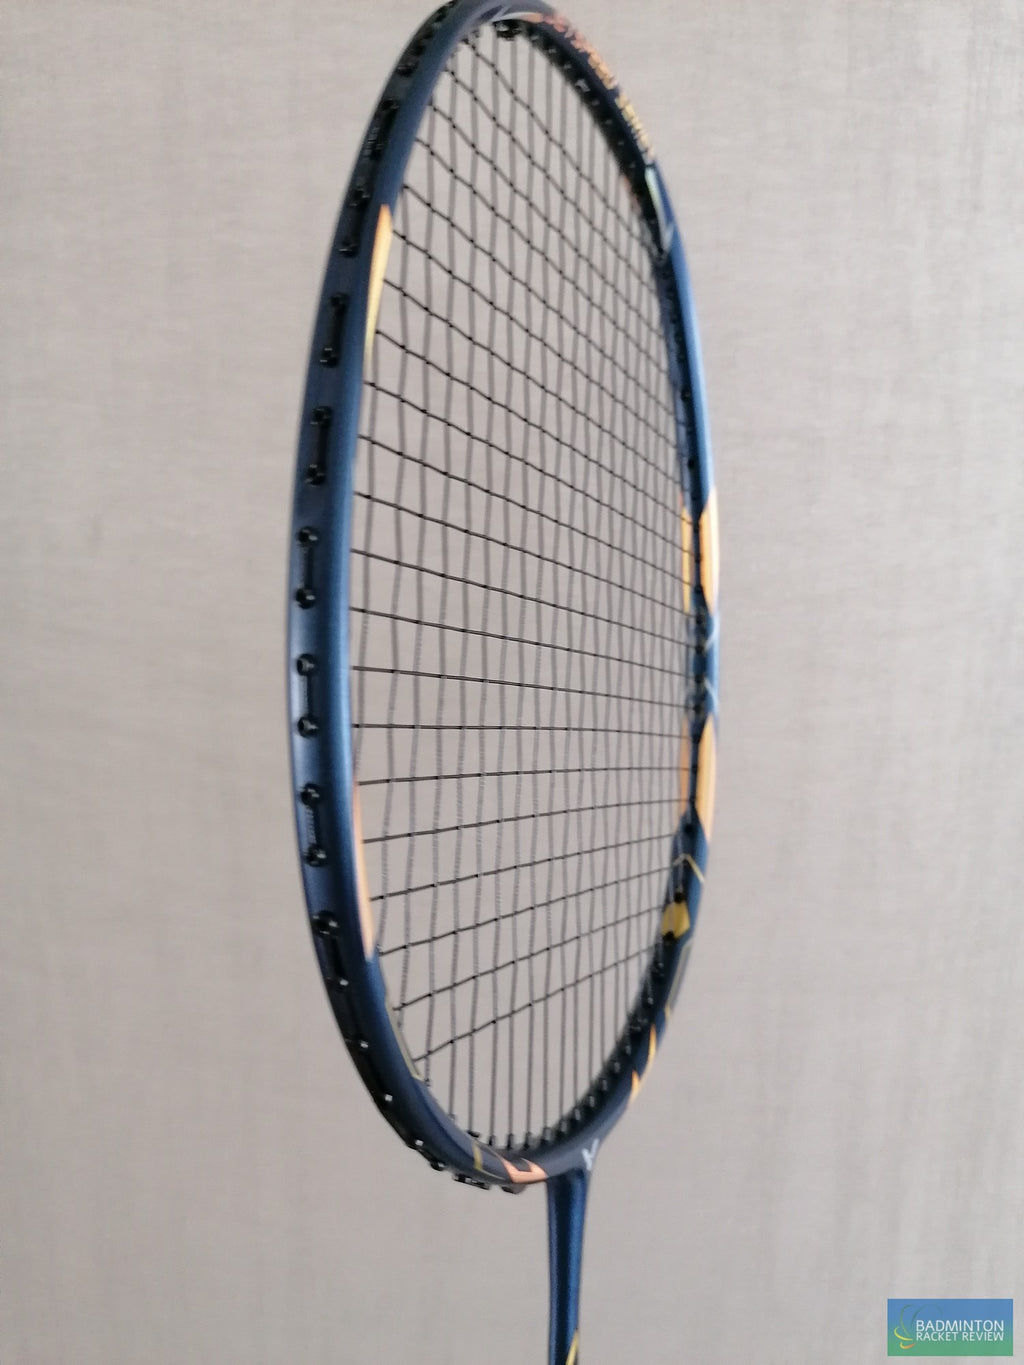 Victor Jetspeed ST1 4u Badminton Racket badminton racket review